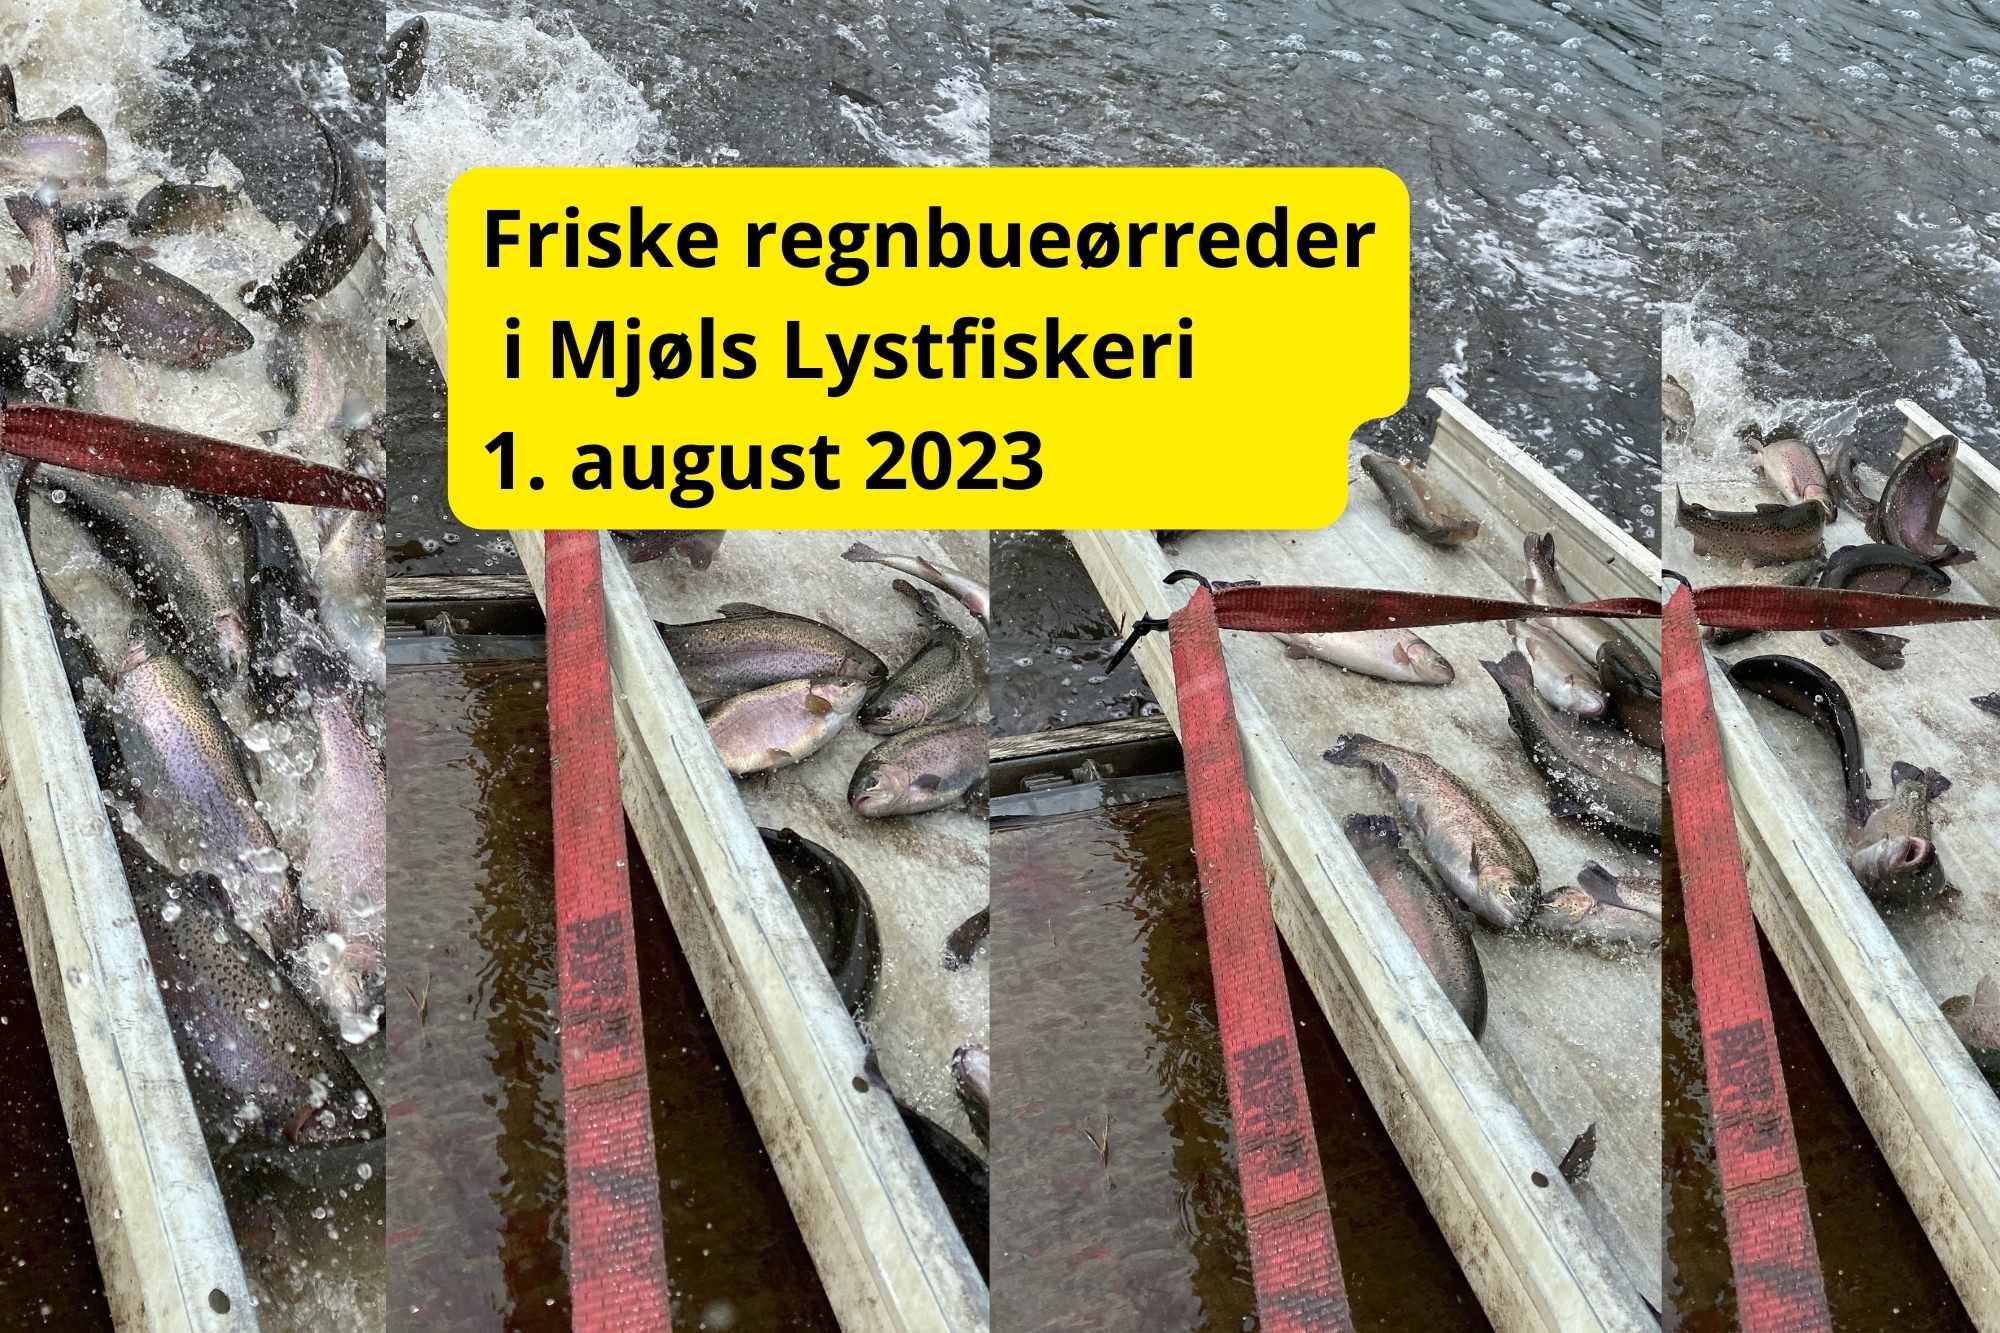 Mjøls Lystfiskeri Rødekro – Friske fisk i SØ1 i dag tirsdag den 1. august 2023